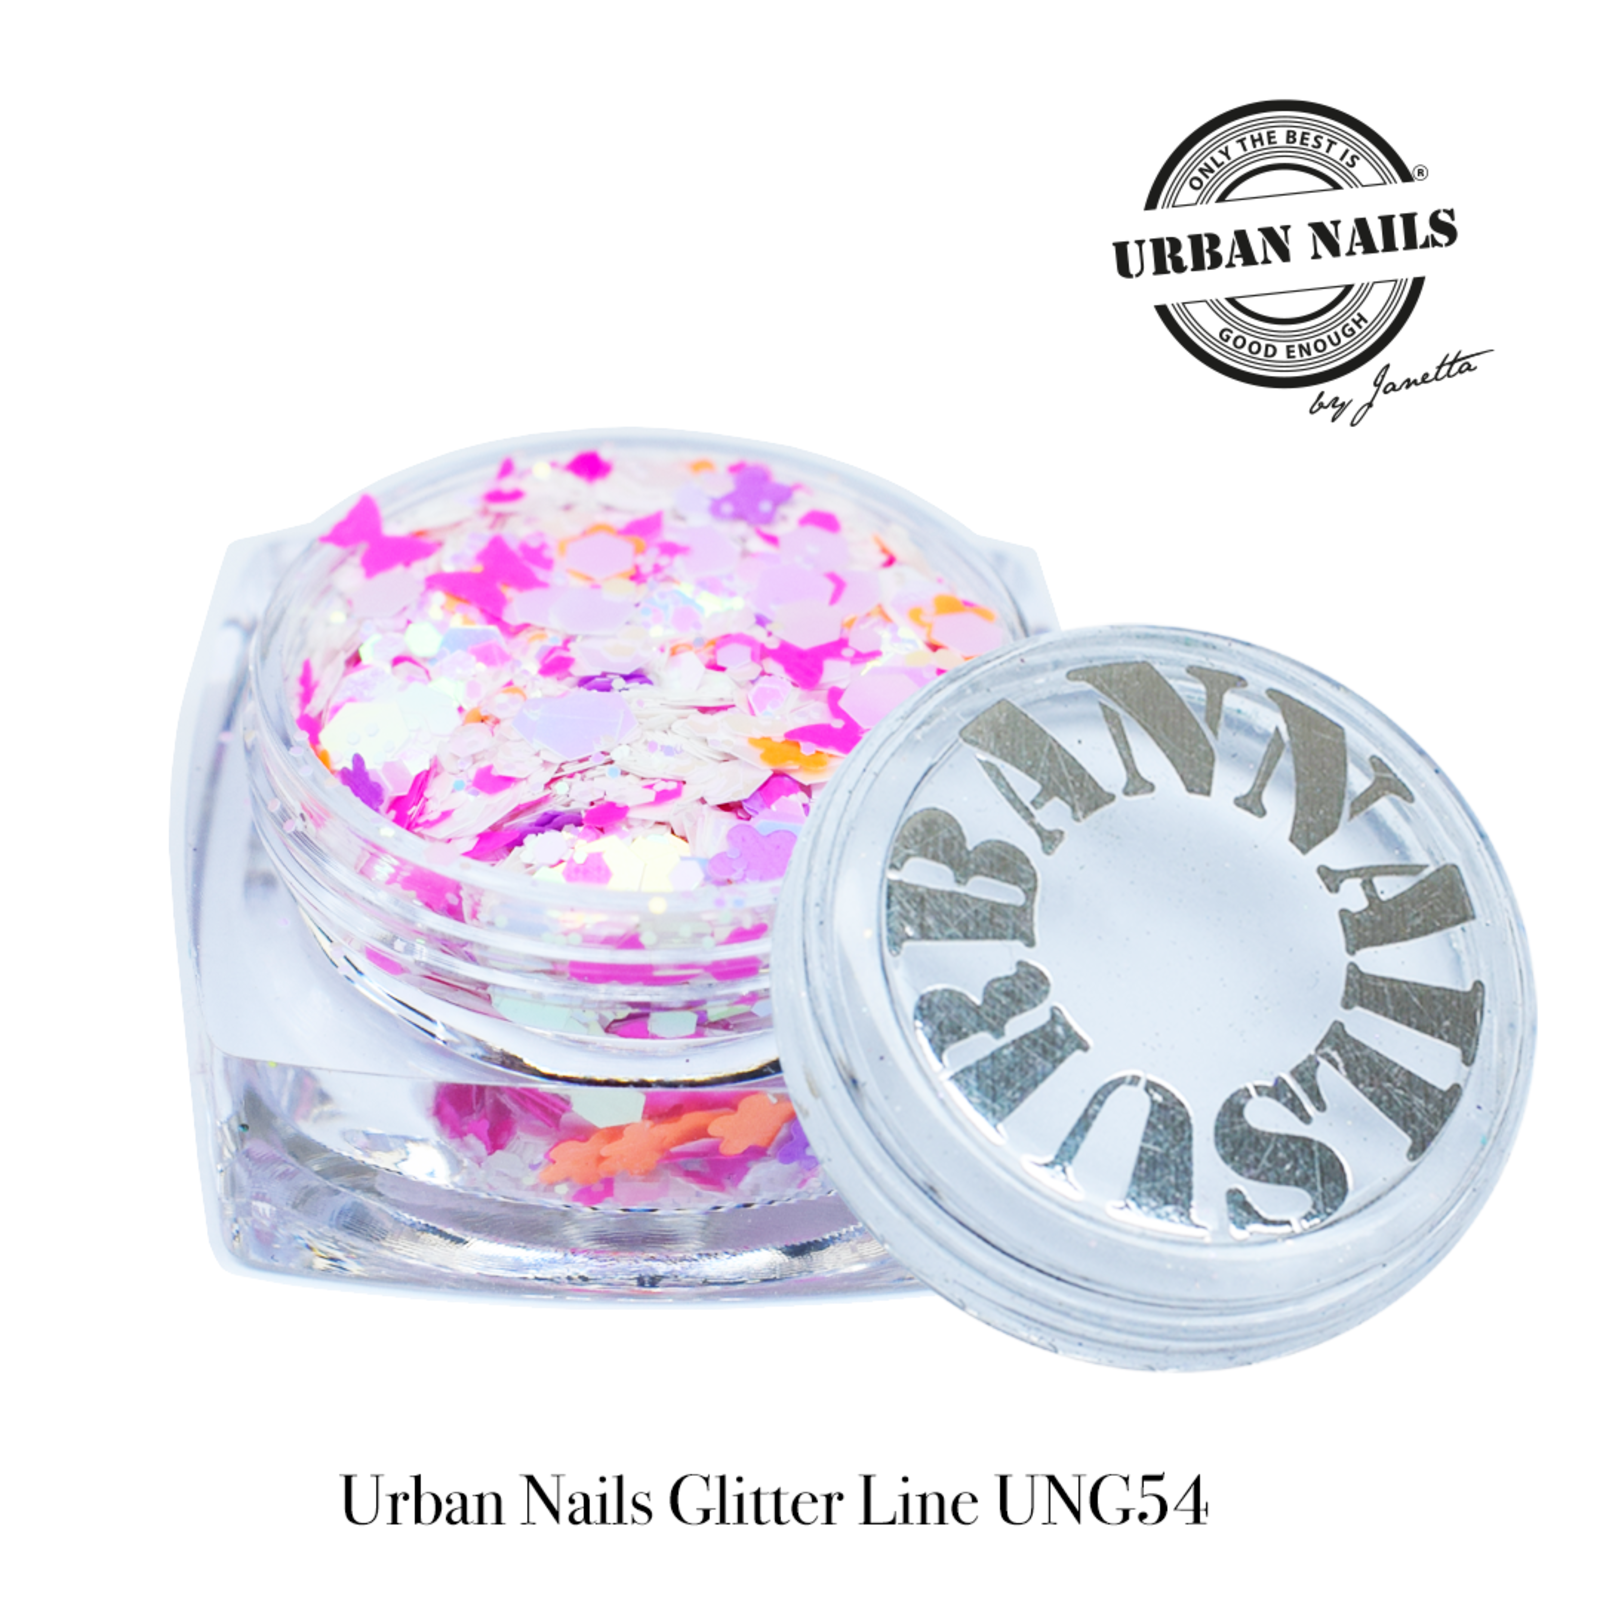 Urban nails Glitter Line UNG54